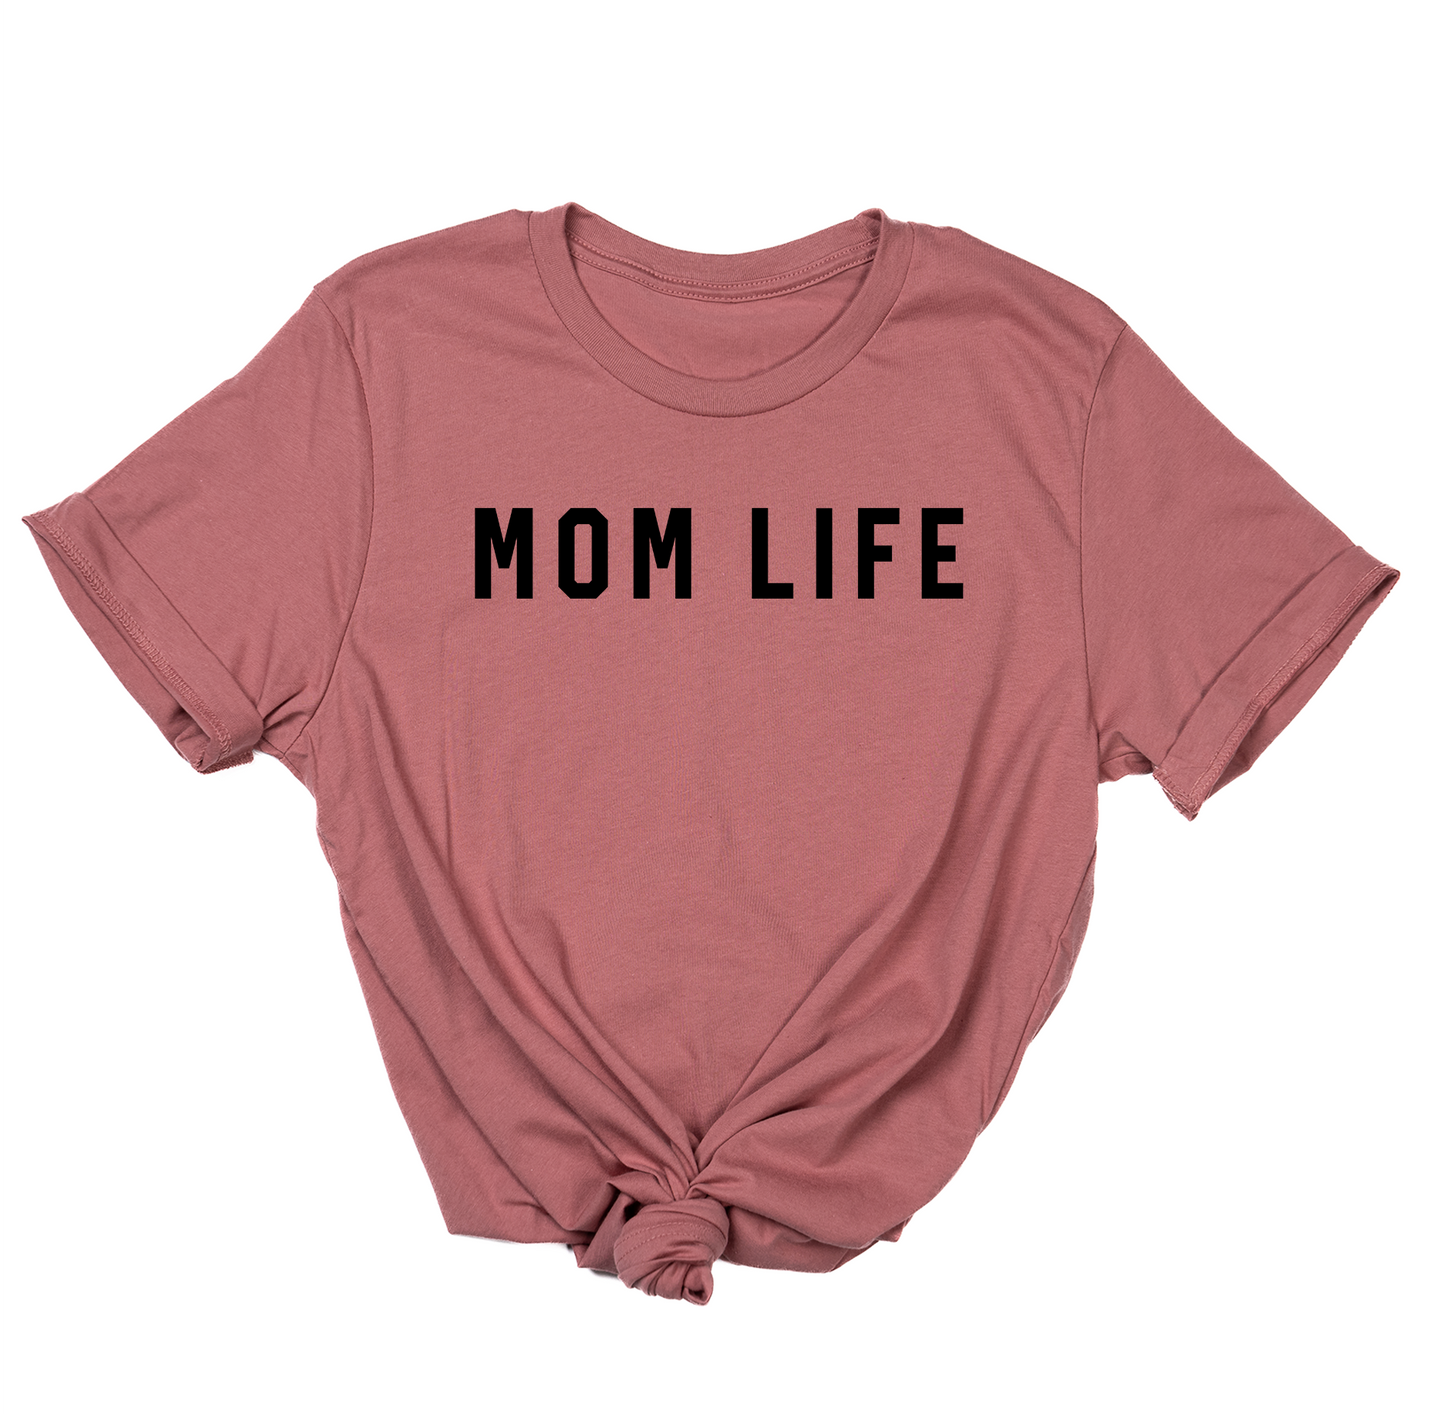 Mom Life (Across Front, Black) - Tee (Mauve)